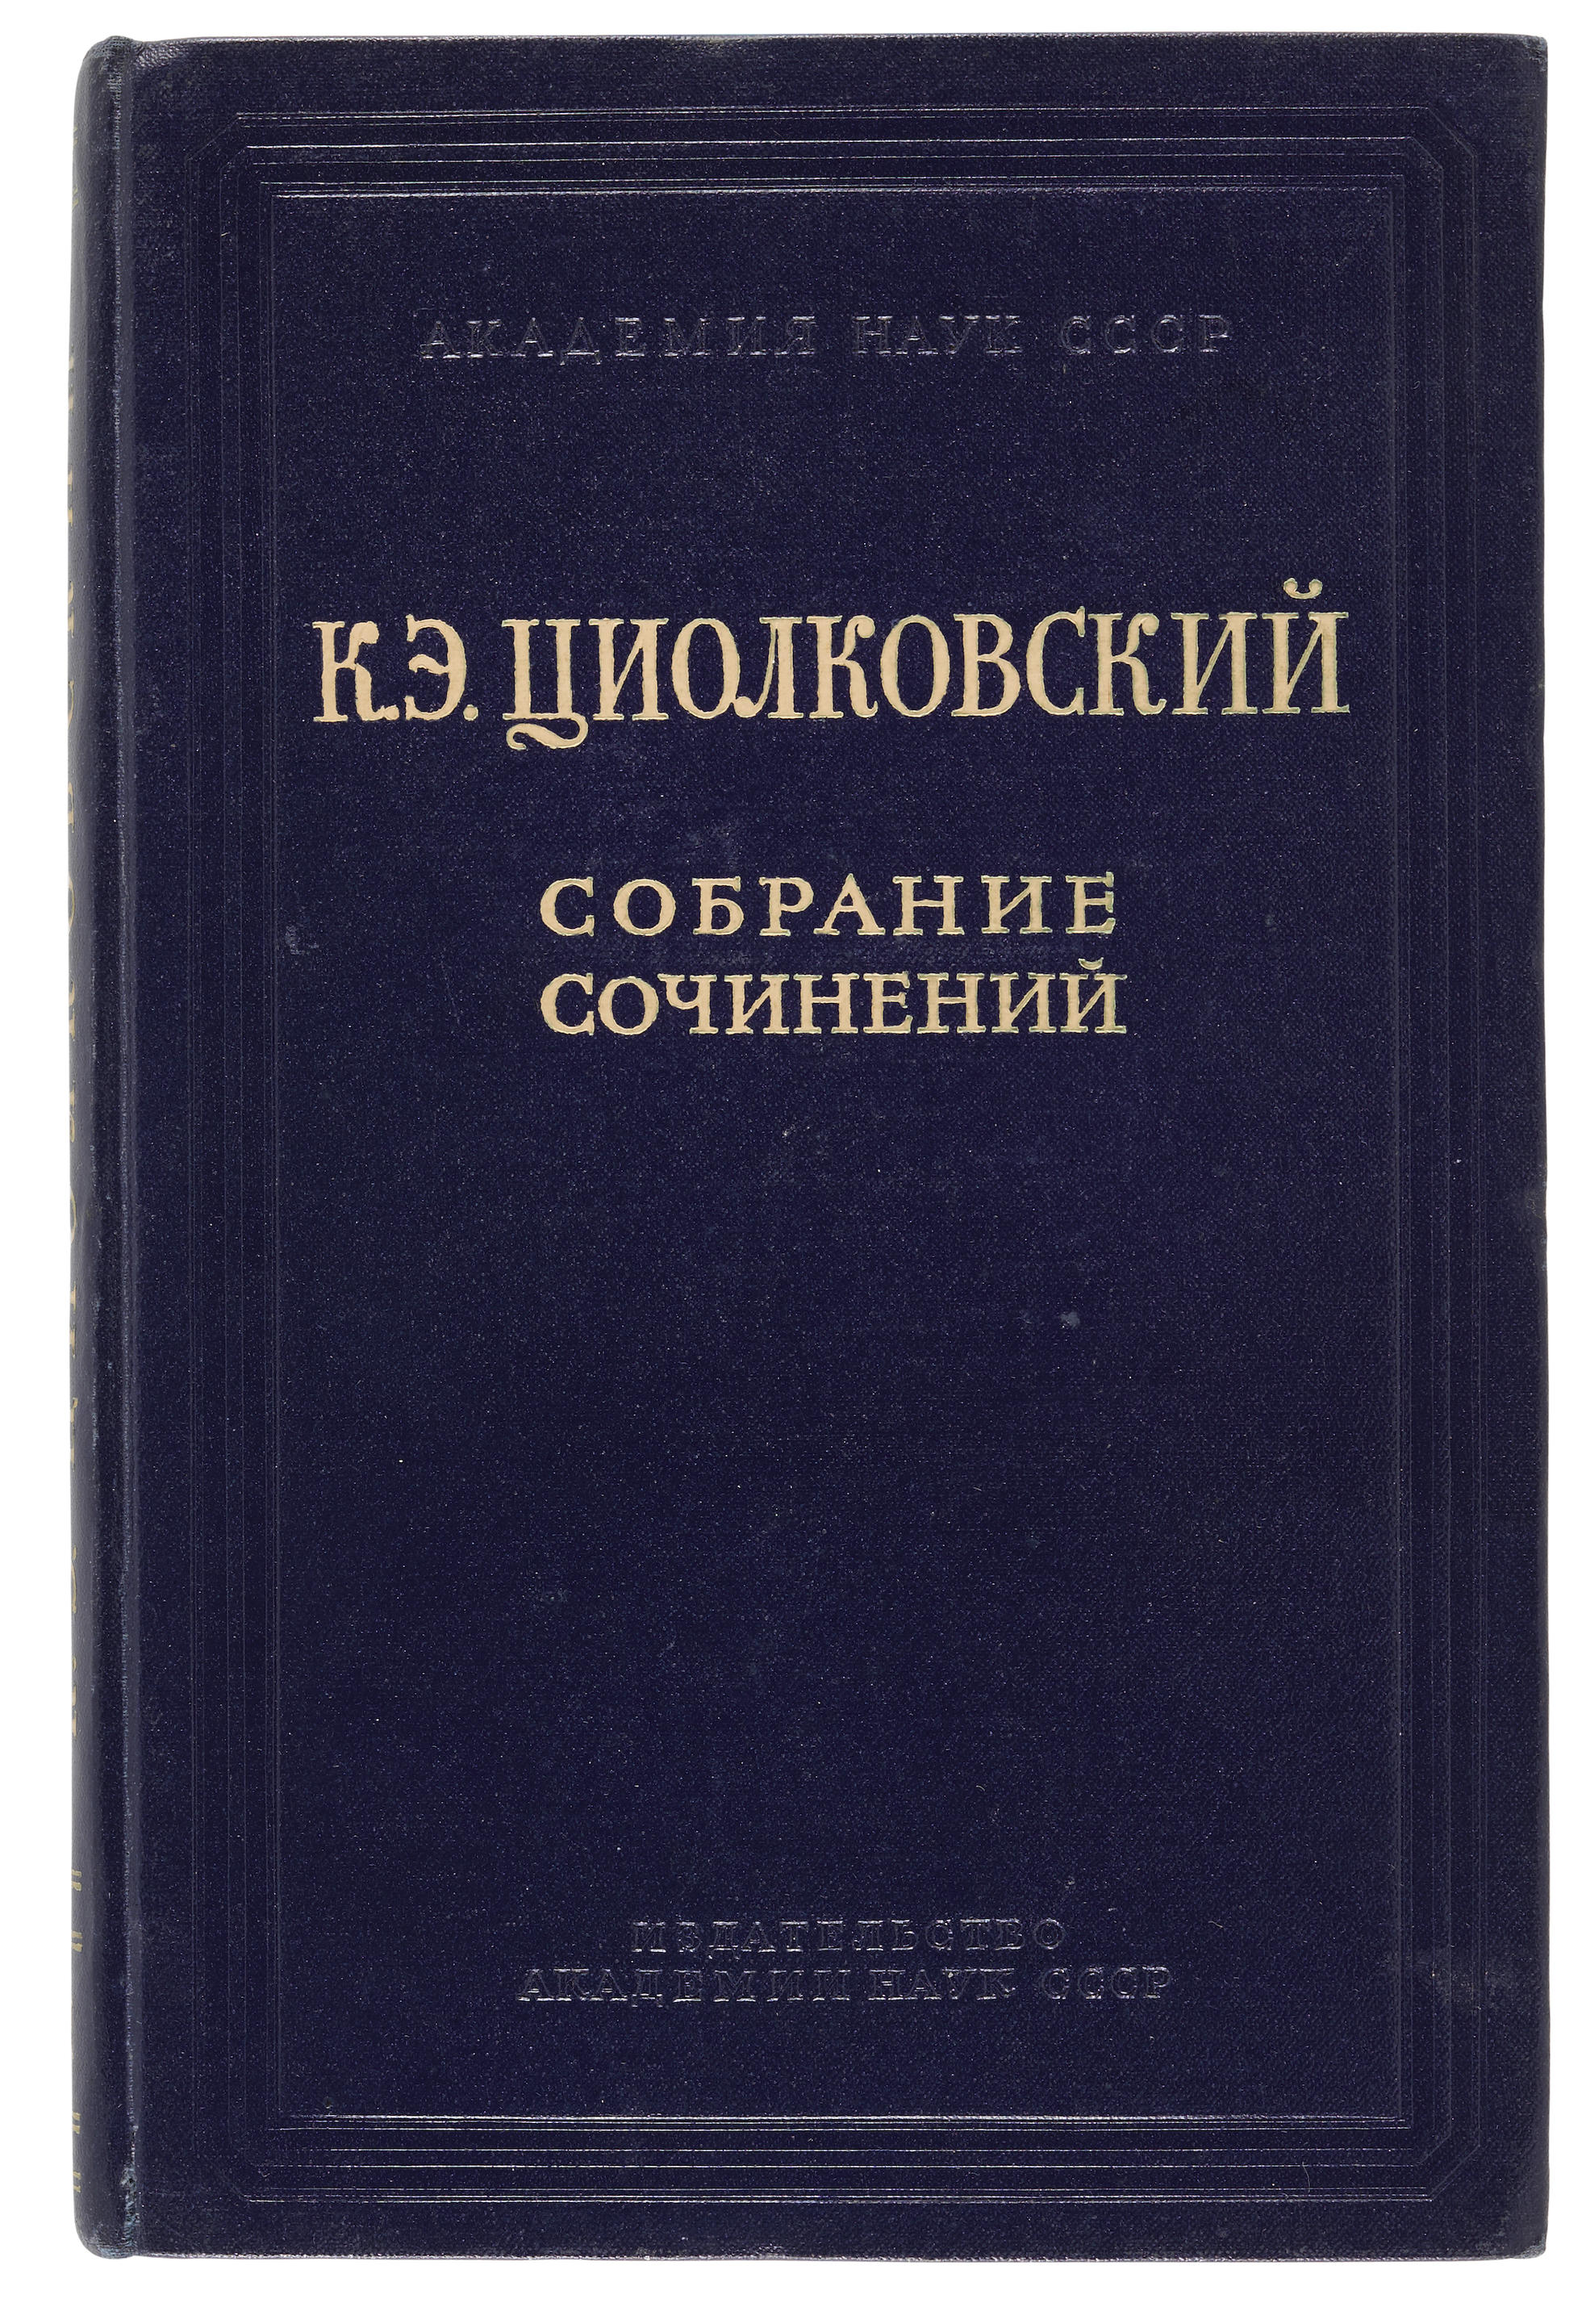 TSIOLKOVSKY's Works, with NASA TRANSLATIONS